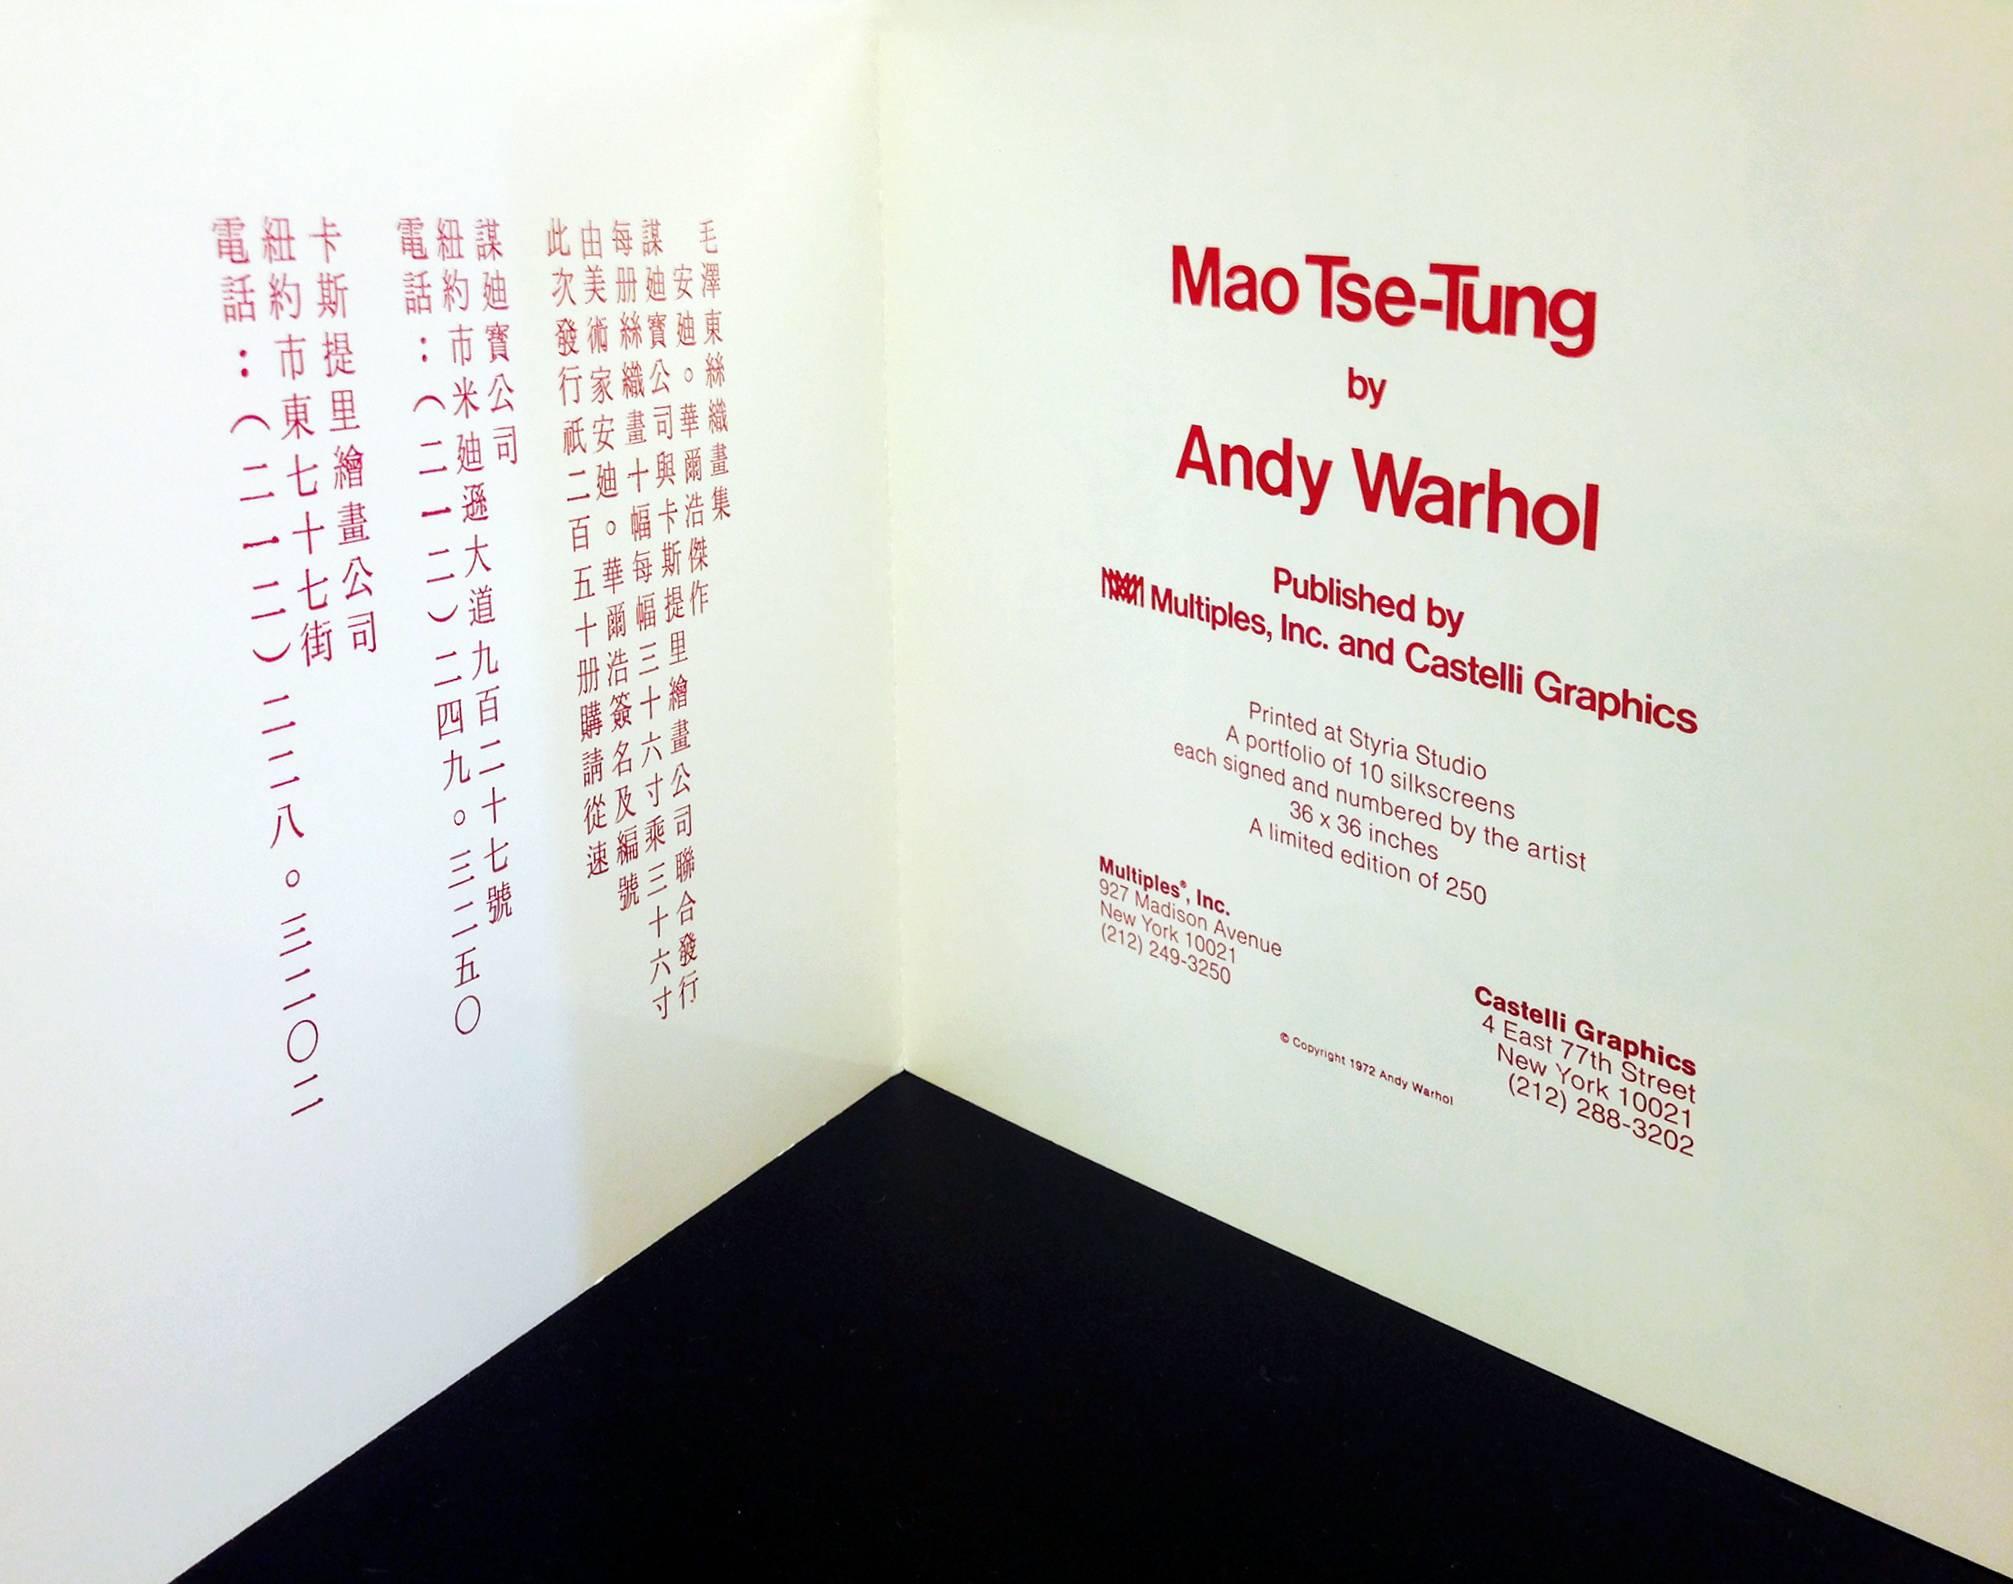 Warhol Mao Castelli announcement 1972 (Warhol at Leo Castelli)  - Pop Art Art by (after) Andy Warhol